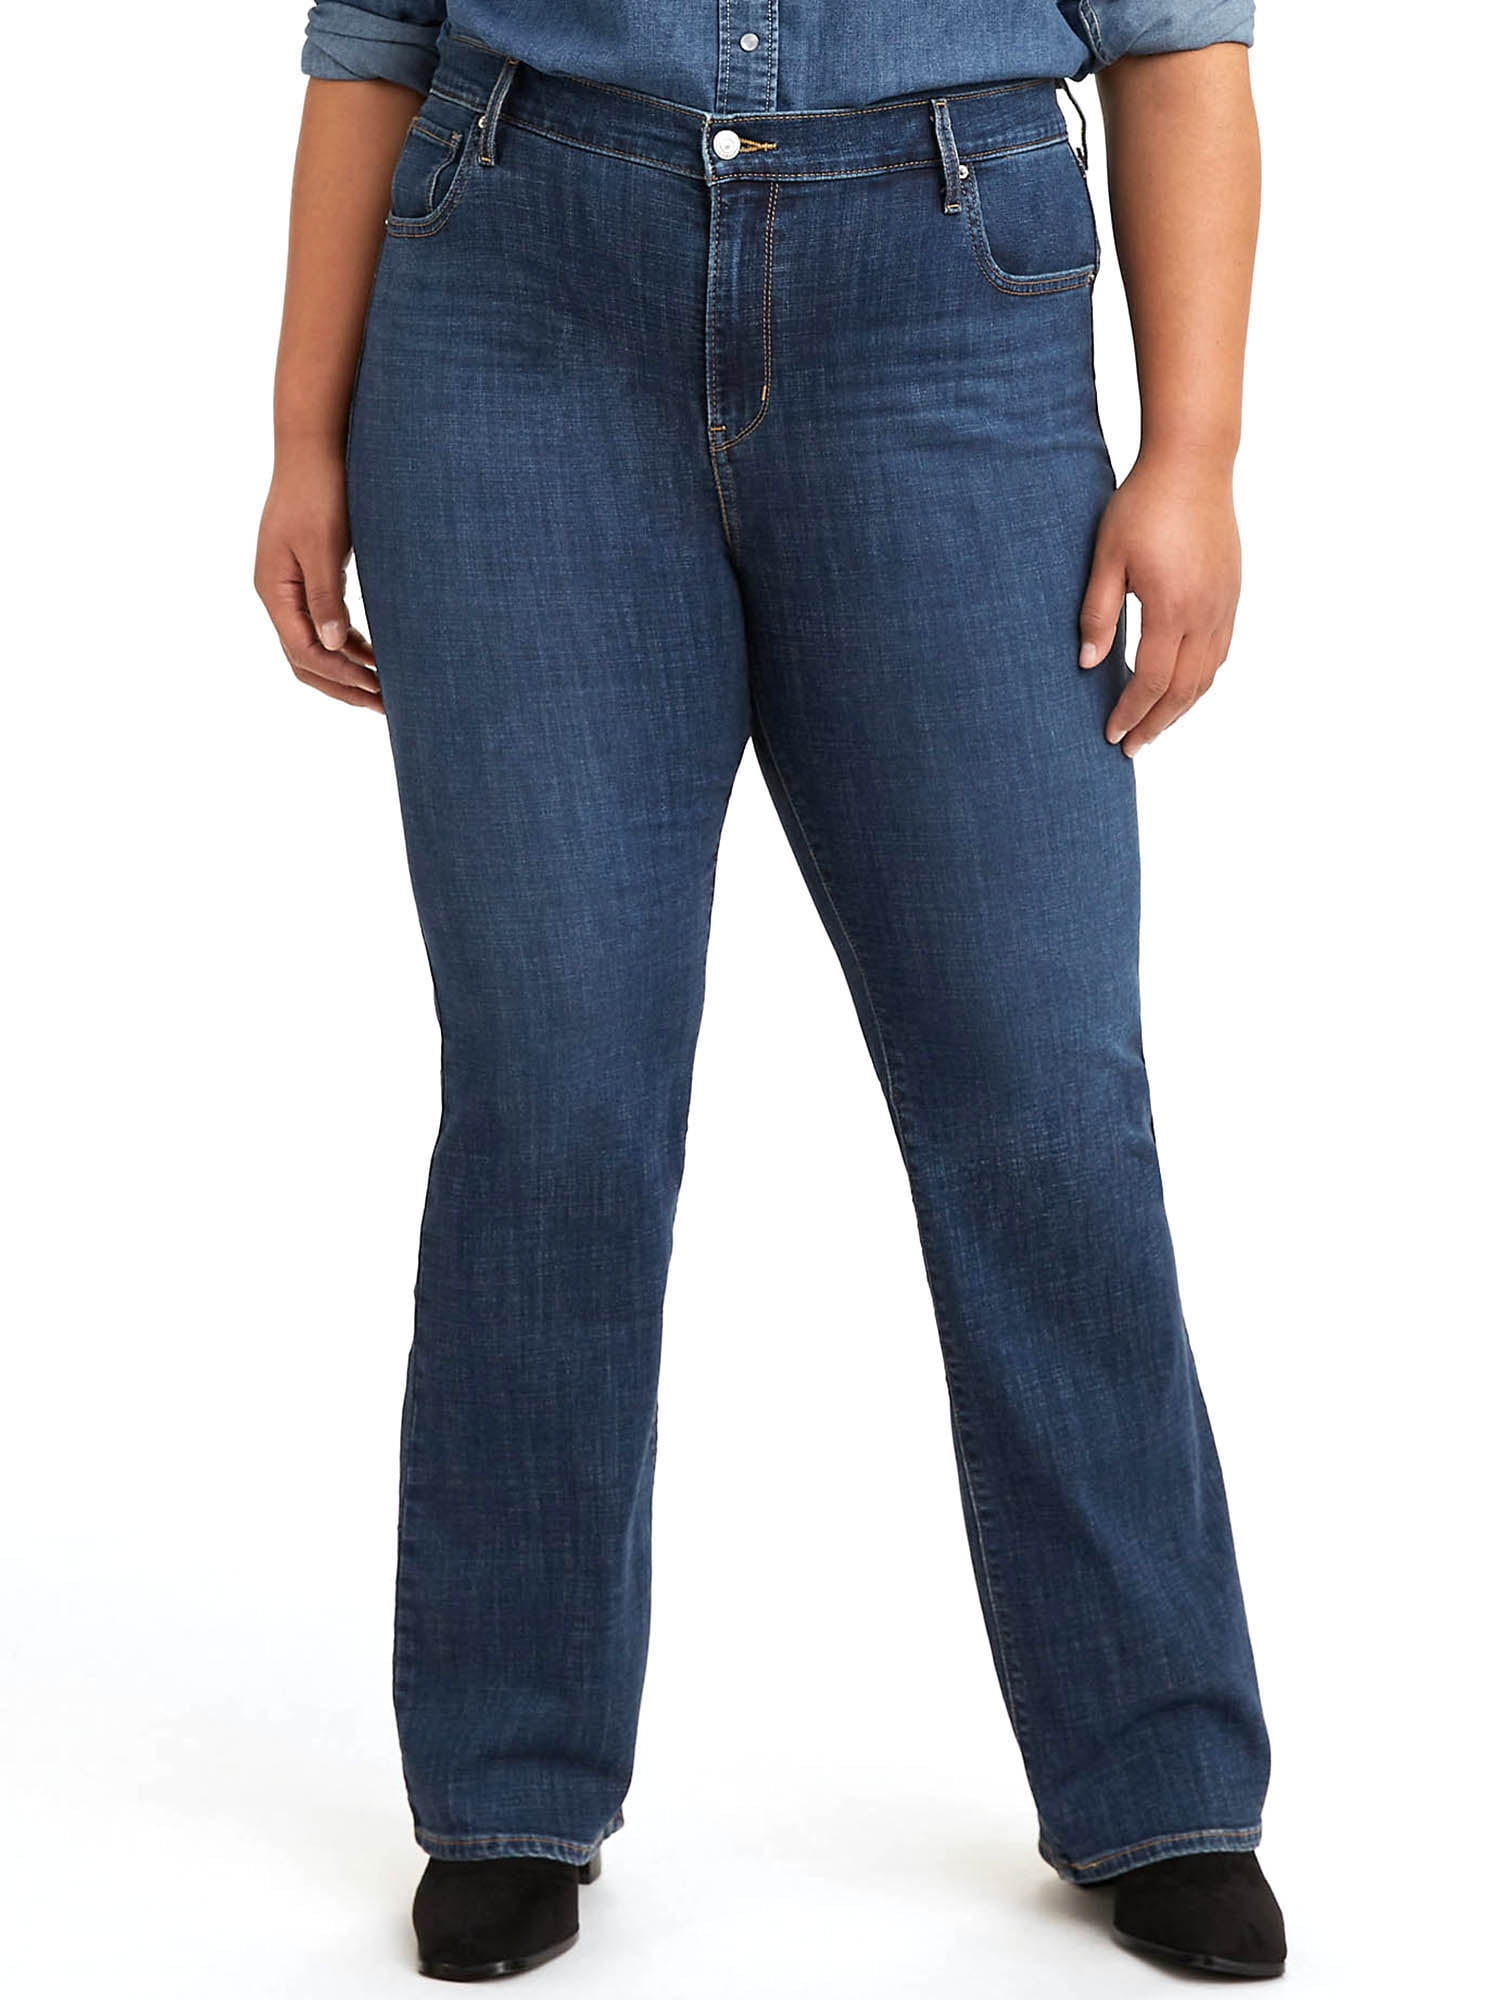 Levi's Women's 725 High-Rise Bootcut Jeans Size 18 Medium W34 X L32 (3209)2